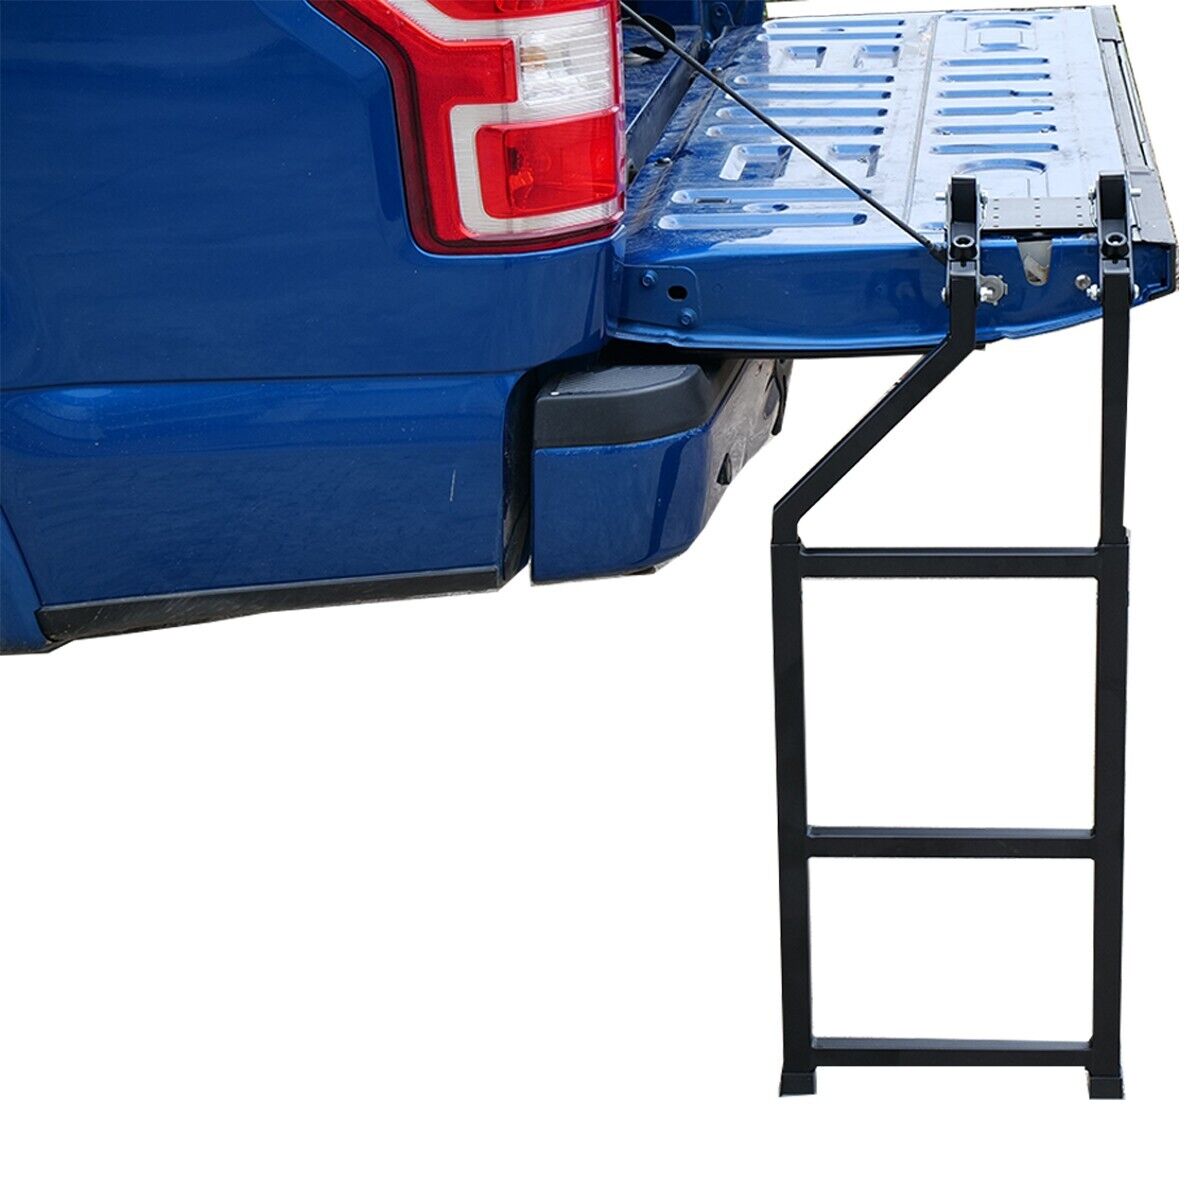 Universal Tailgate Ladder Foldable Truck Rear Gate Step Ladder for Pickup Truck